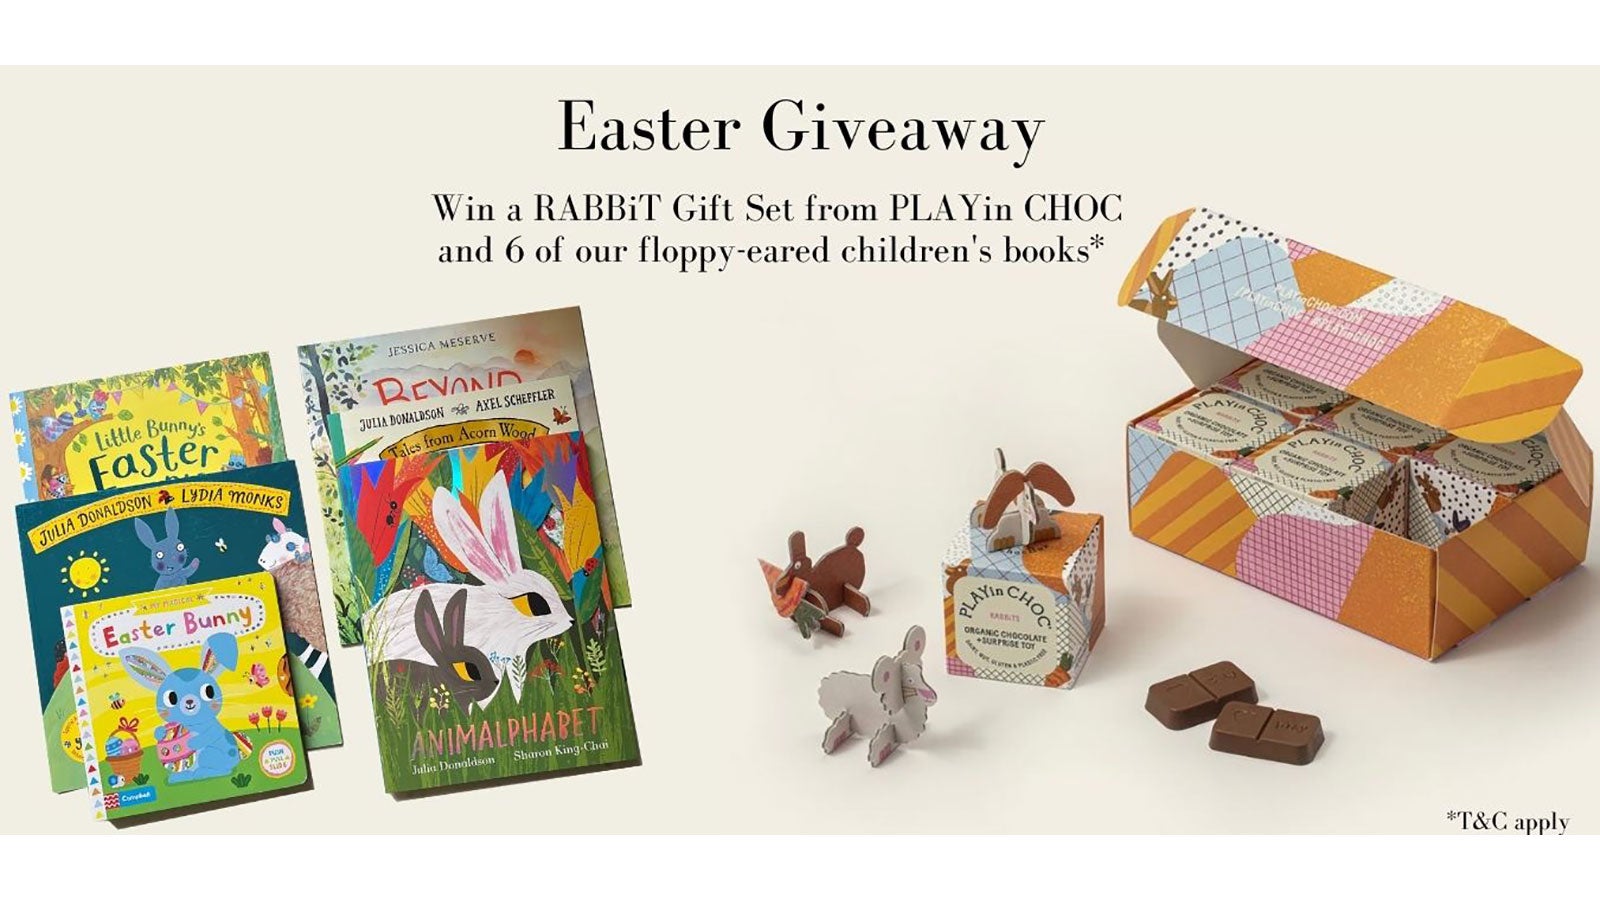 A range of Pan Macmillan children's books and a Rabbit Gift Set from PLAYin CHOC.